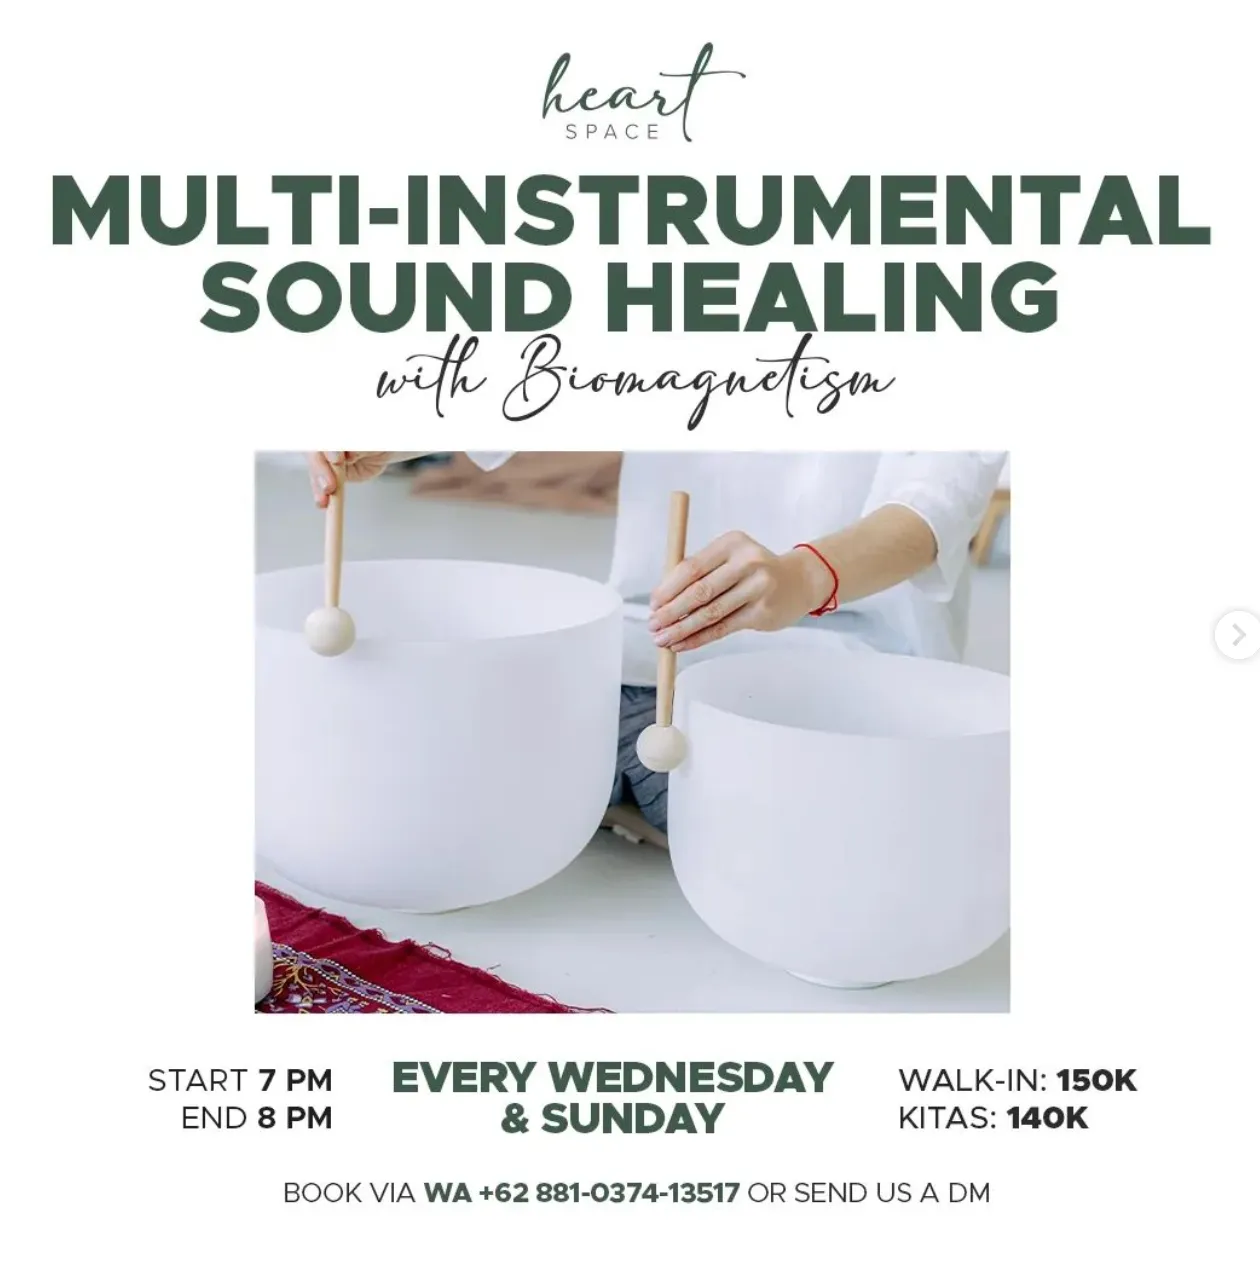 Health Multi-Instrumental Sound Healing with Biomagnetism 18418